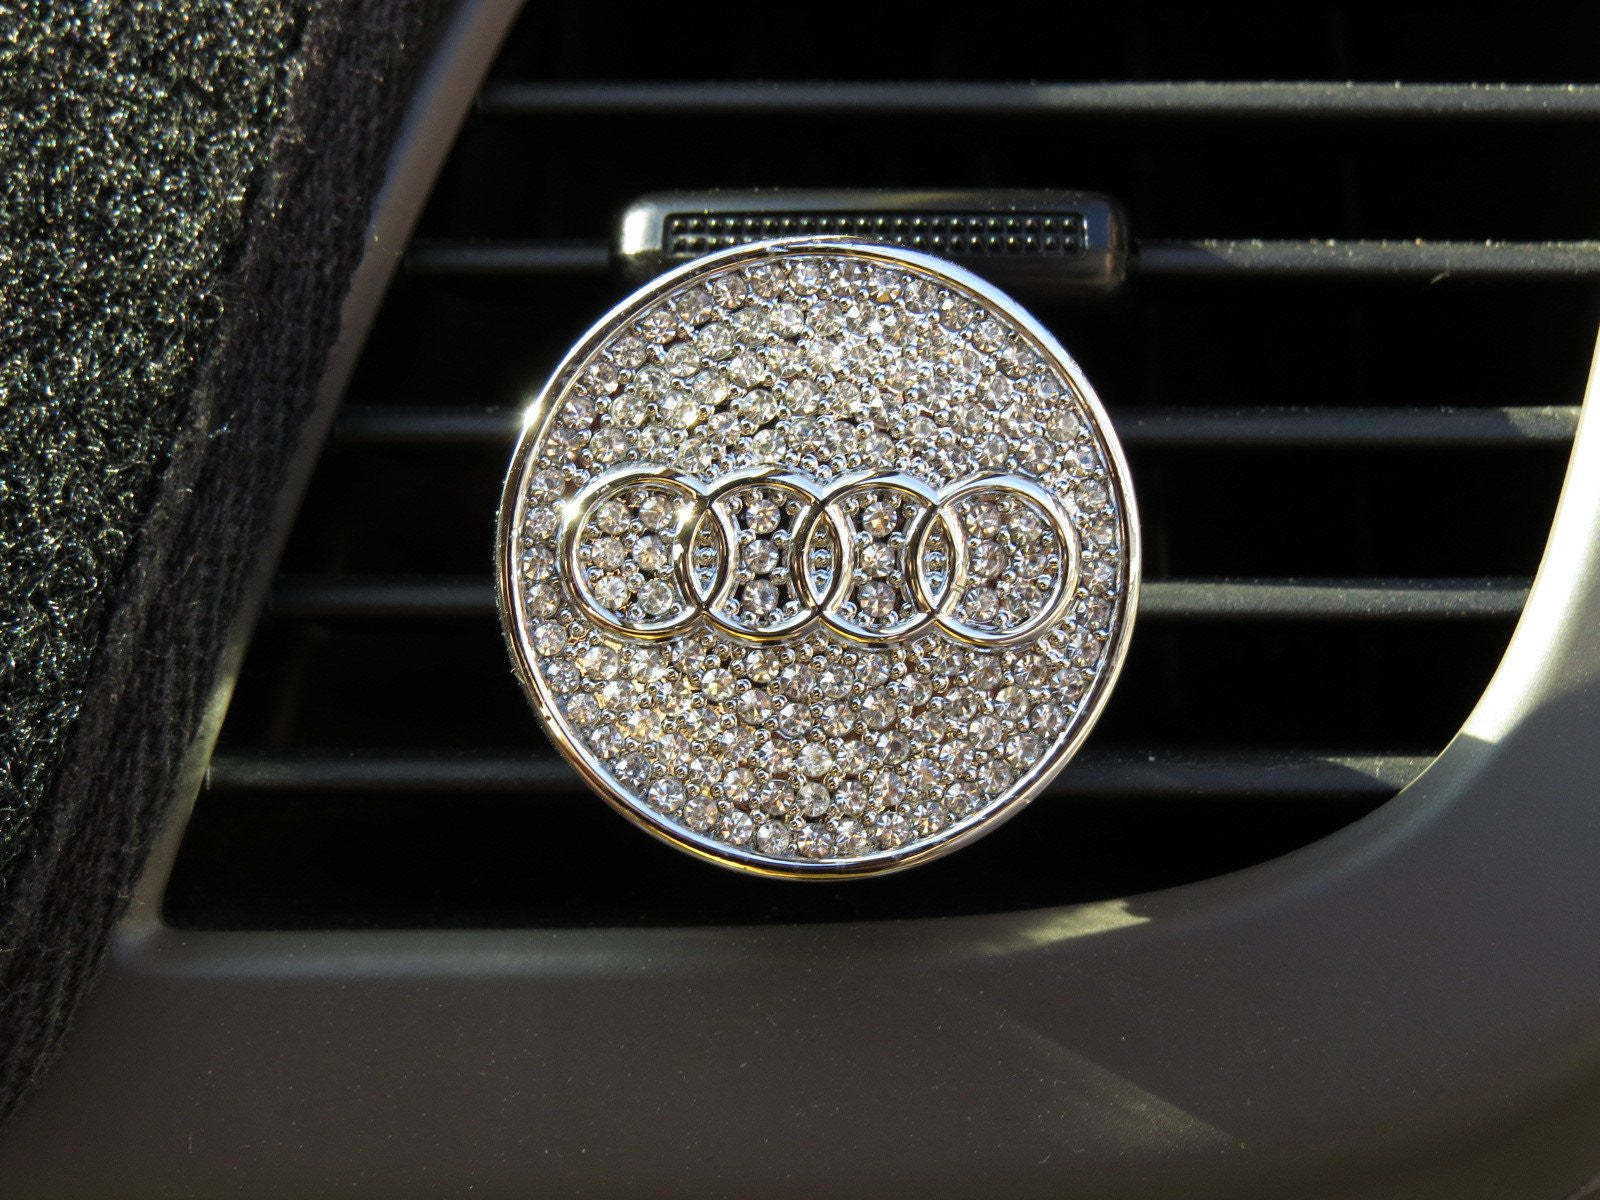 Pinalloy Car Air Freshener Fragrance Perfume with Audi Emblem Logo - Pinalloy Online Auto Accessories Lightweight Car Kit 